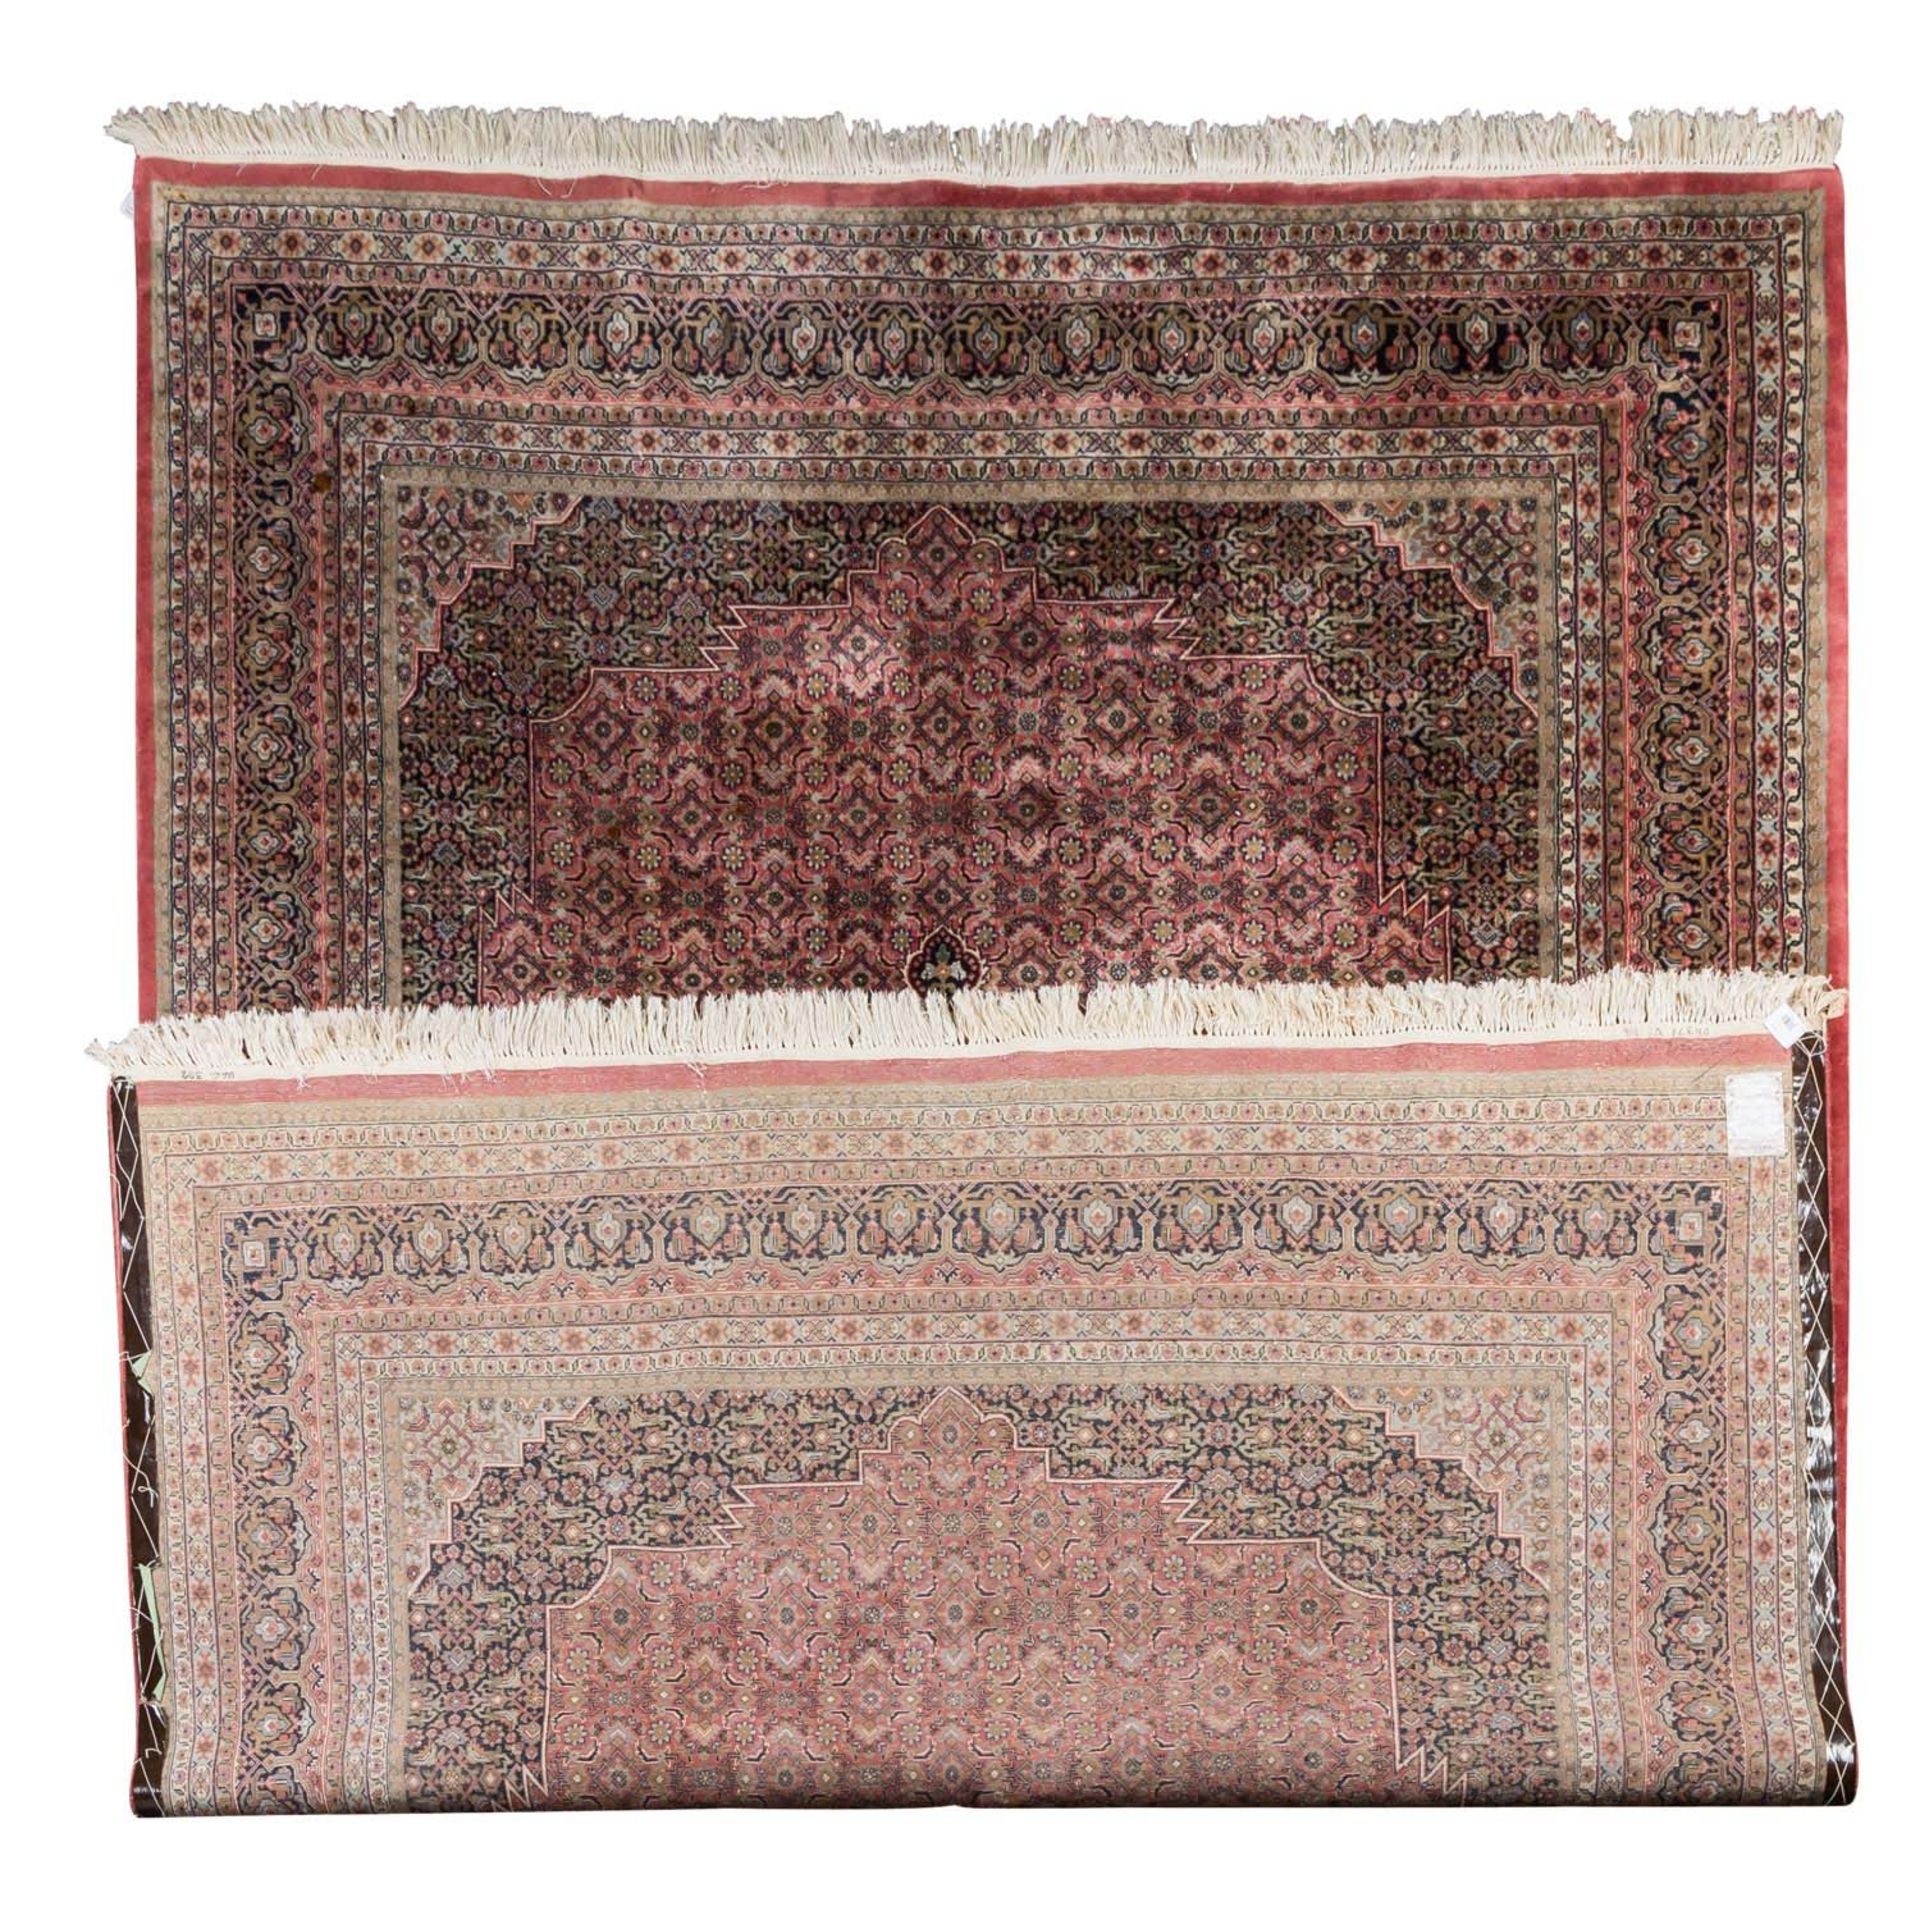 Orientteppich. 'BIDJAR'/INDIEN, 20. Jh., ca. 350x253 cm. - Image 2 of 3